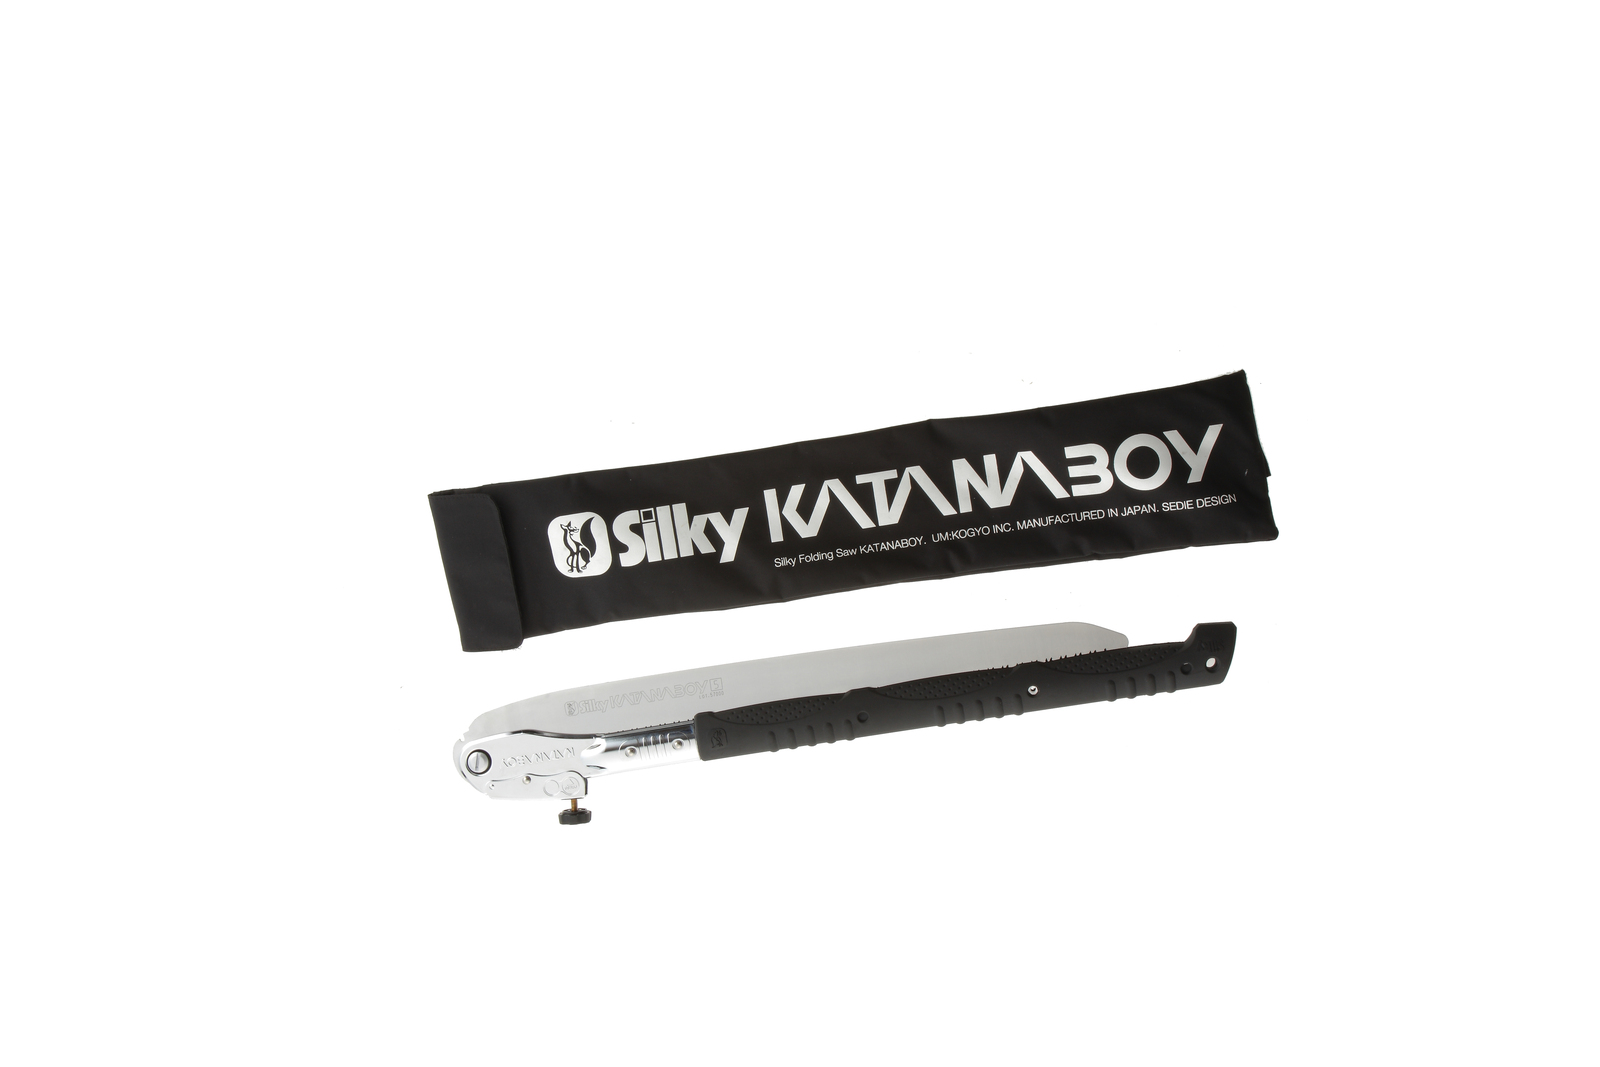 SILKY Katana Boy 500mm Folding Saw